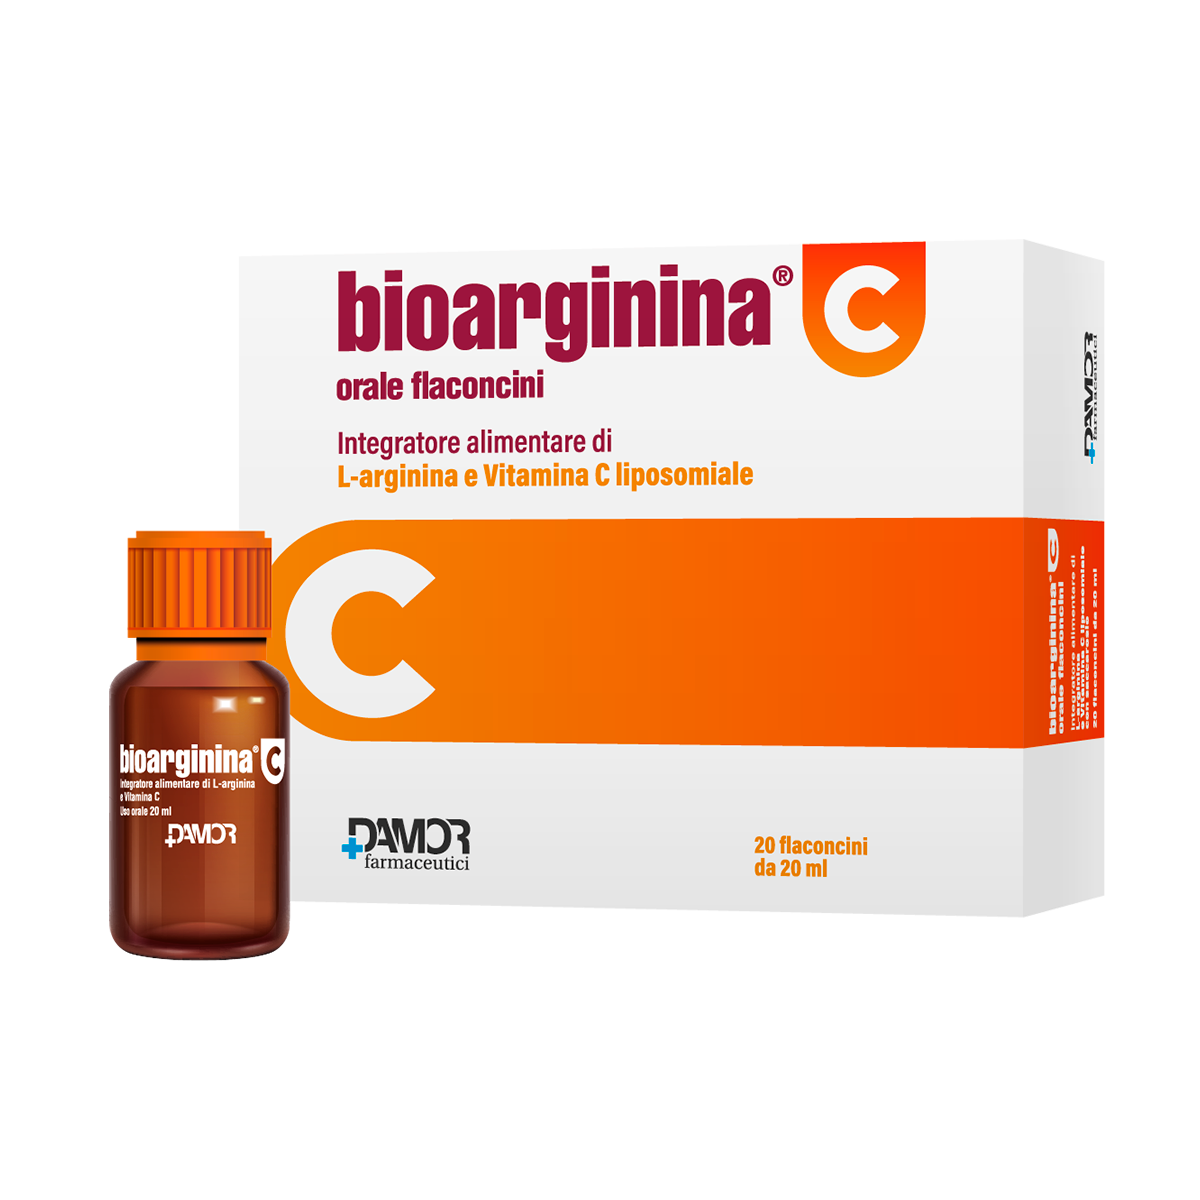 Bioarginina® C orale